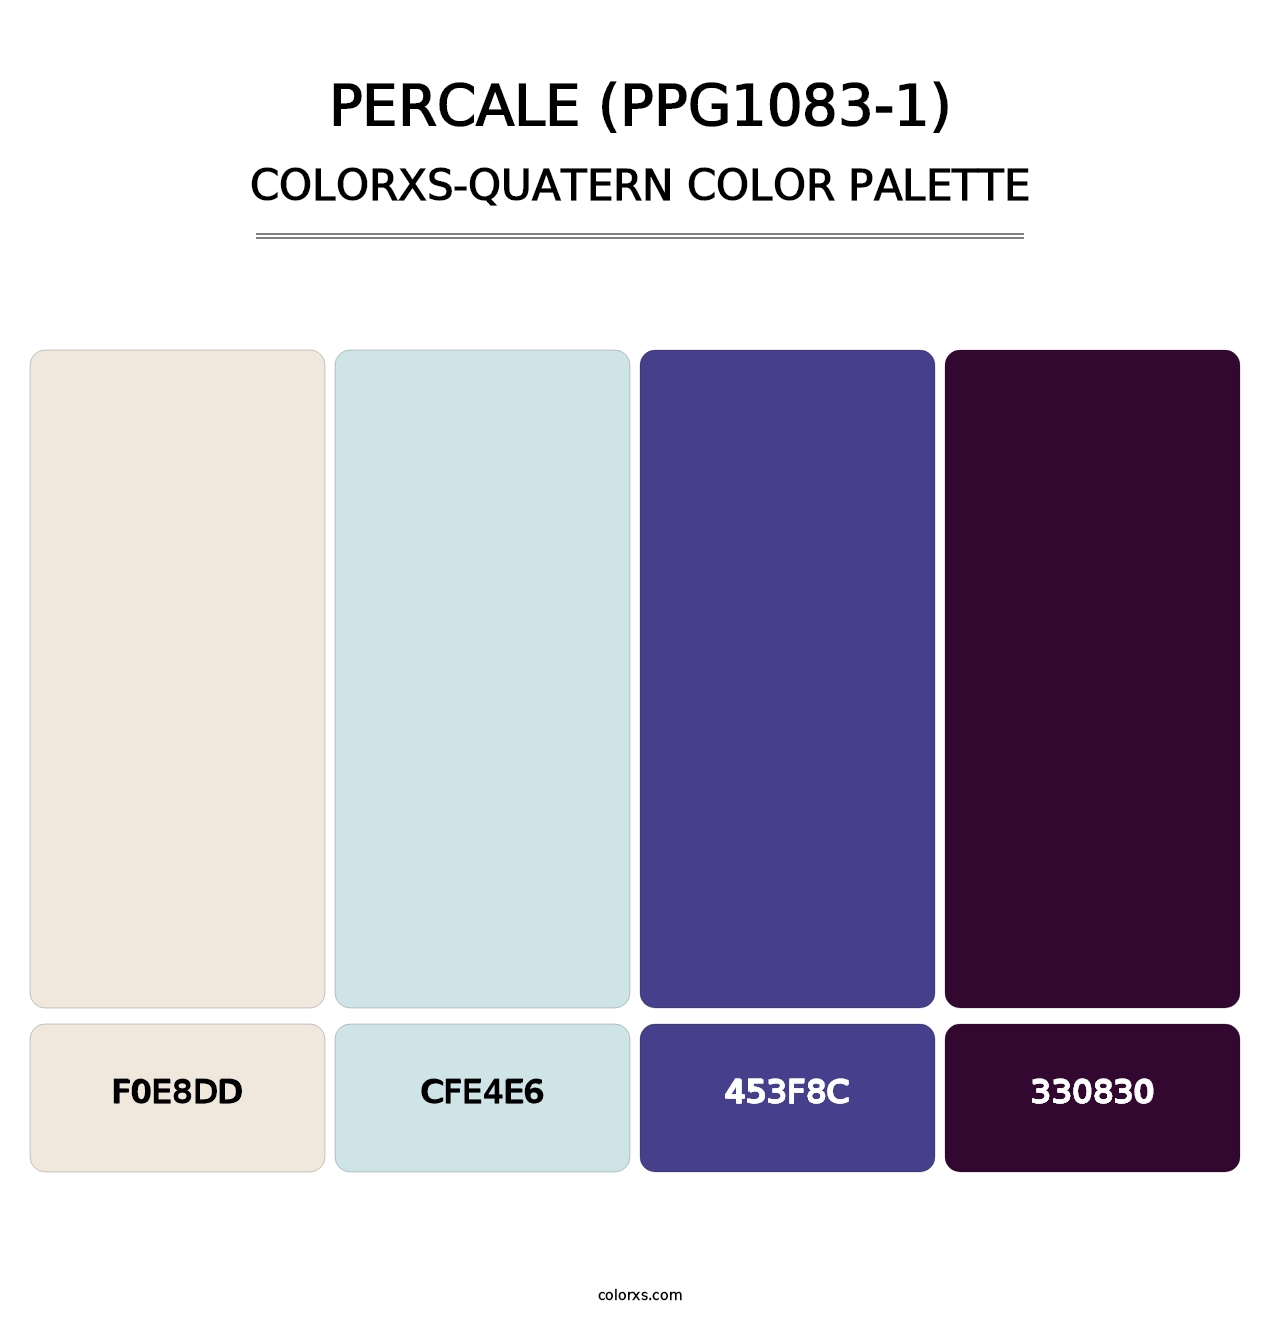 Percale (PPG1083-1) - Colorxs Quatern Palette